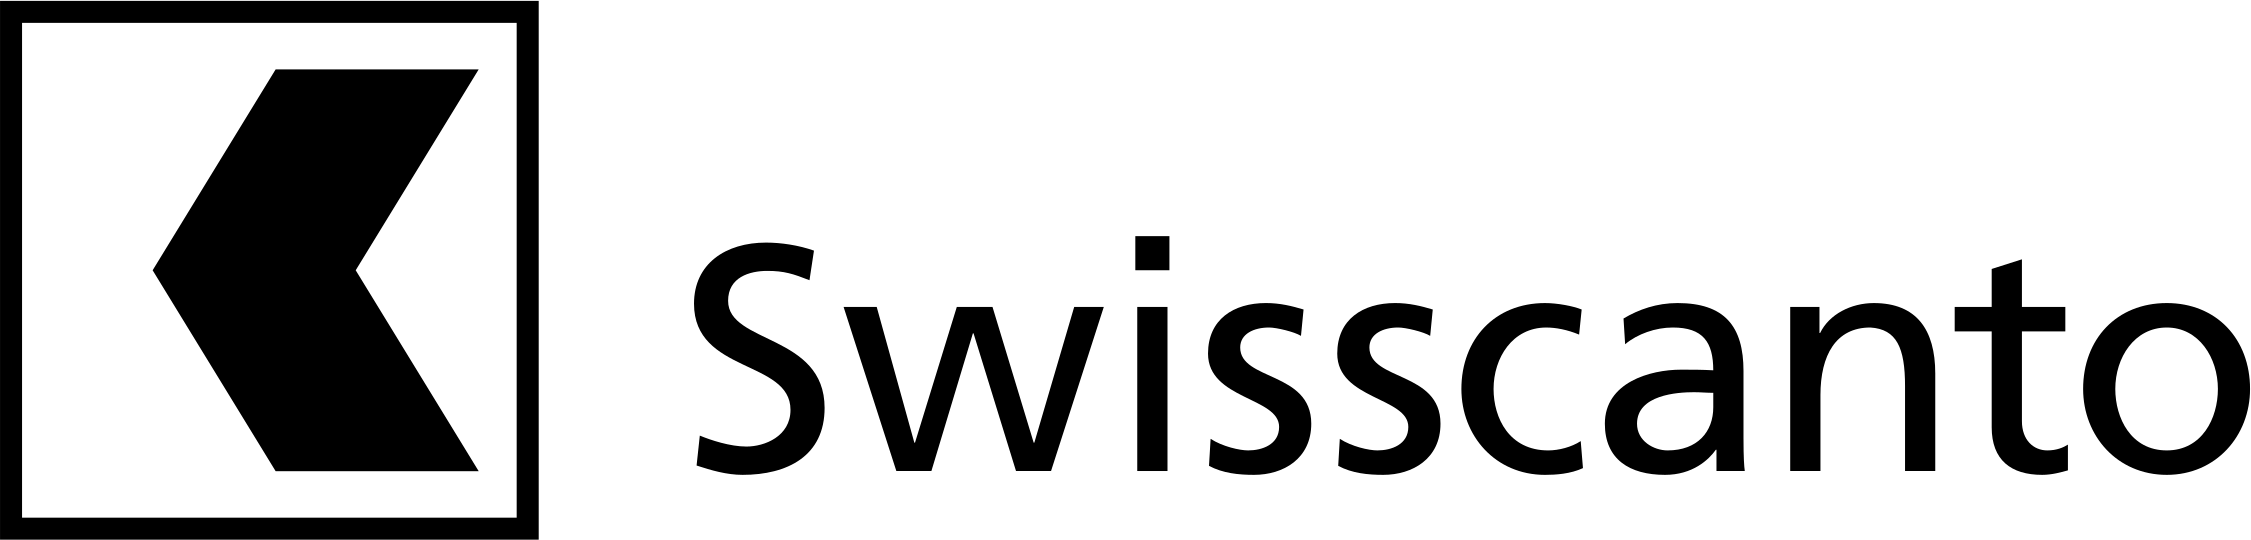 Swisscanto Logo SVG